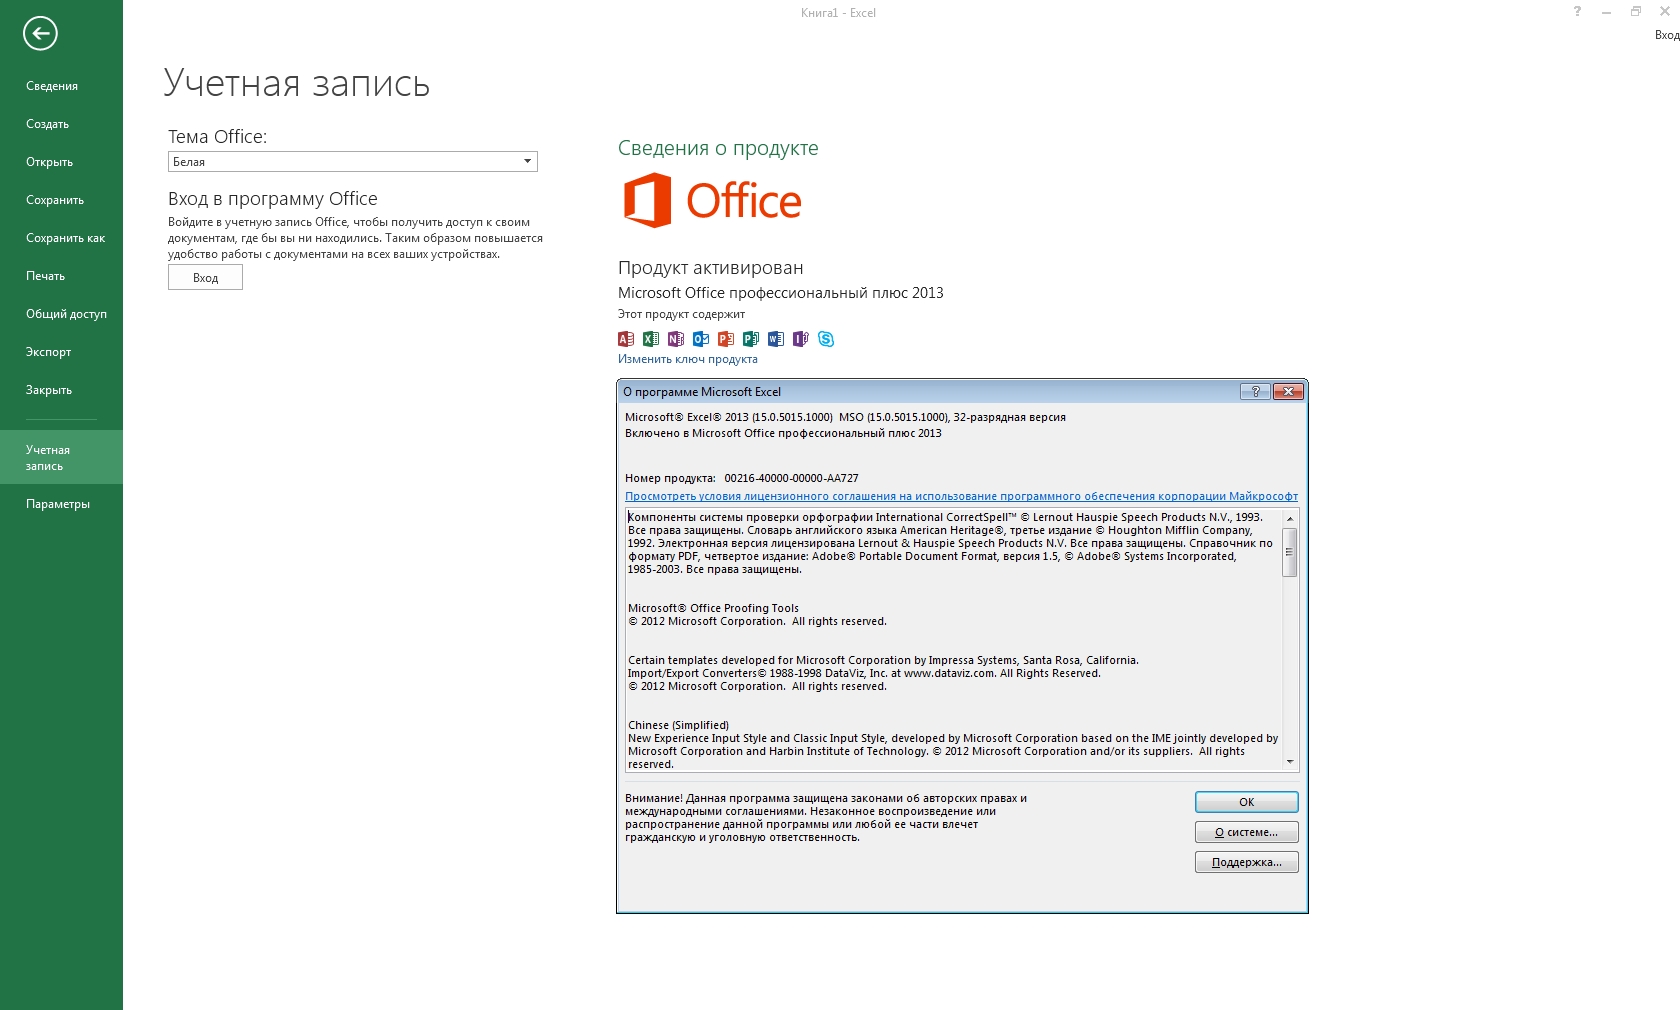 Включи версию без. Microsoft Office 2013 sp1 professional Plus. Microsoft Office 2013 Pro Plus. Фото программы офис 2013. Программа для активации Майкрософт офис.